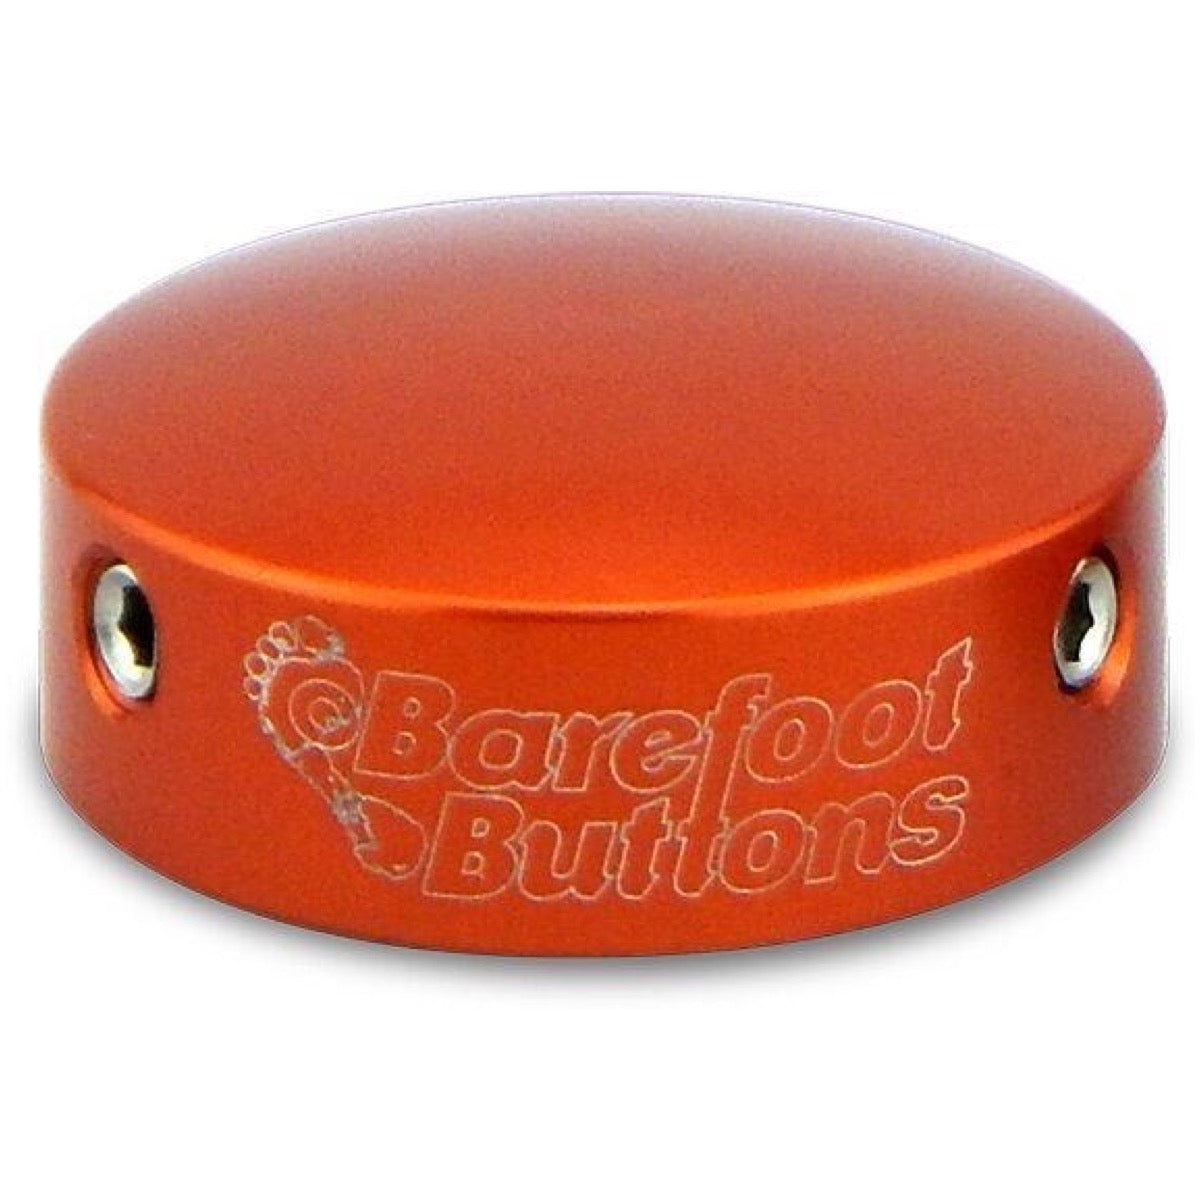 Barefoot Buttons Version 1, Orange